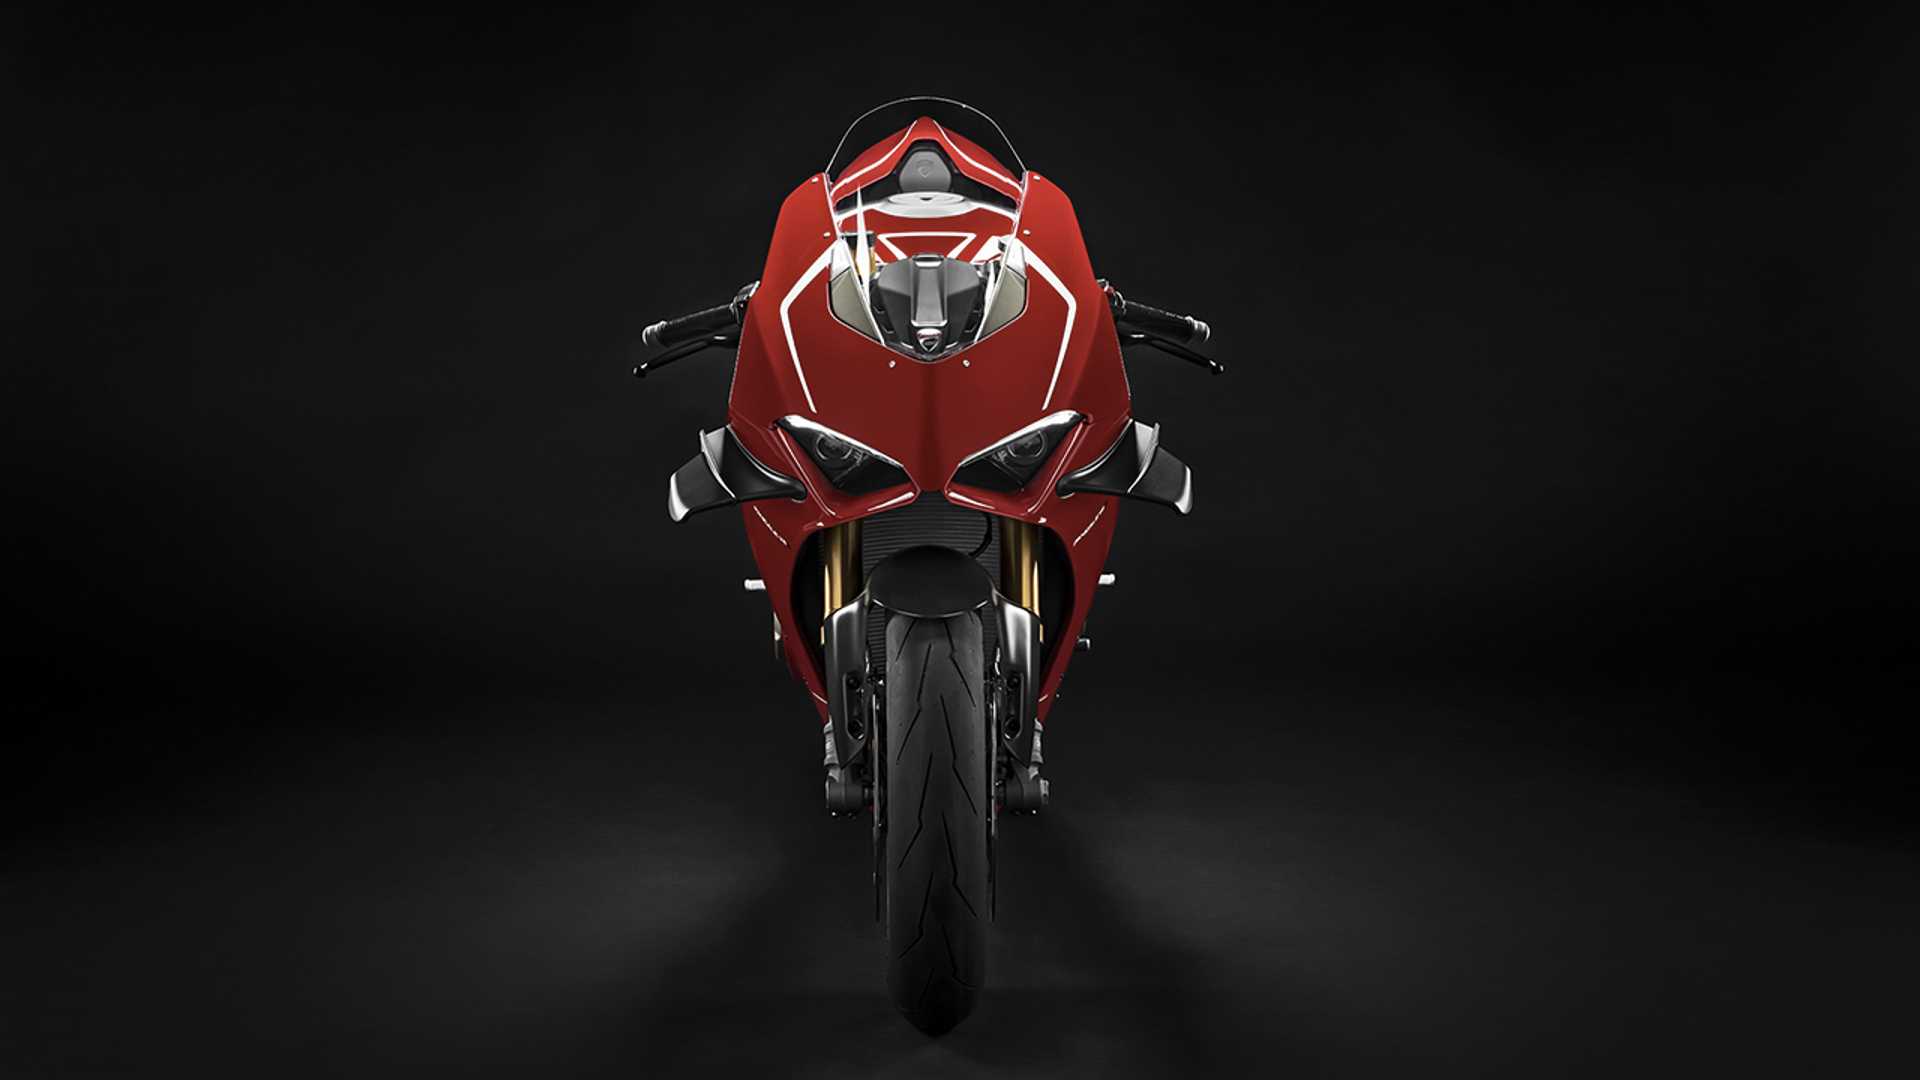 We Get A Peek At The New Ducati V4 Superleggera's Specs